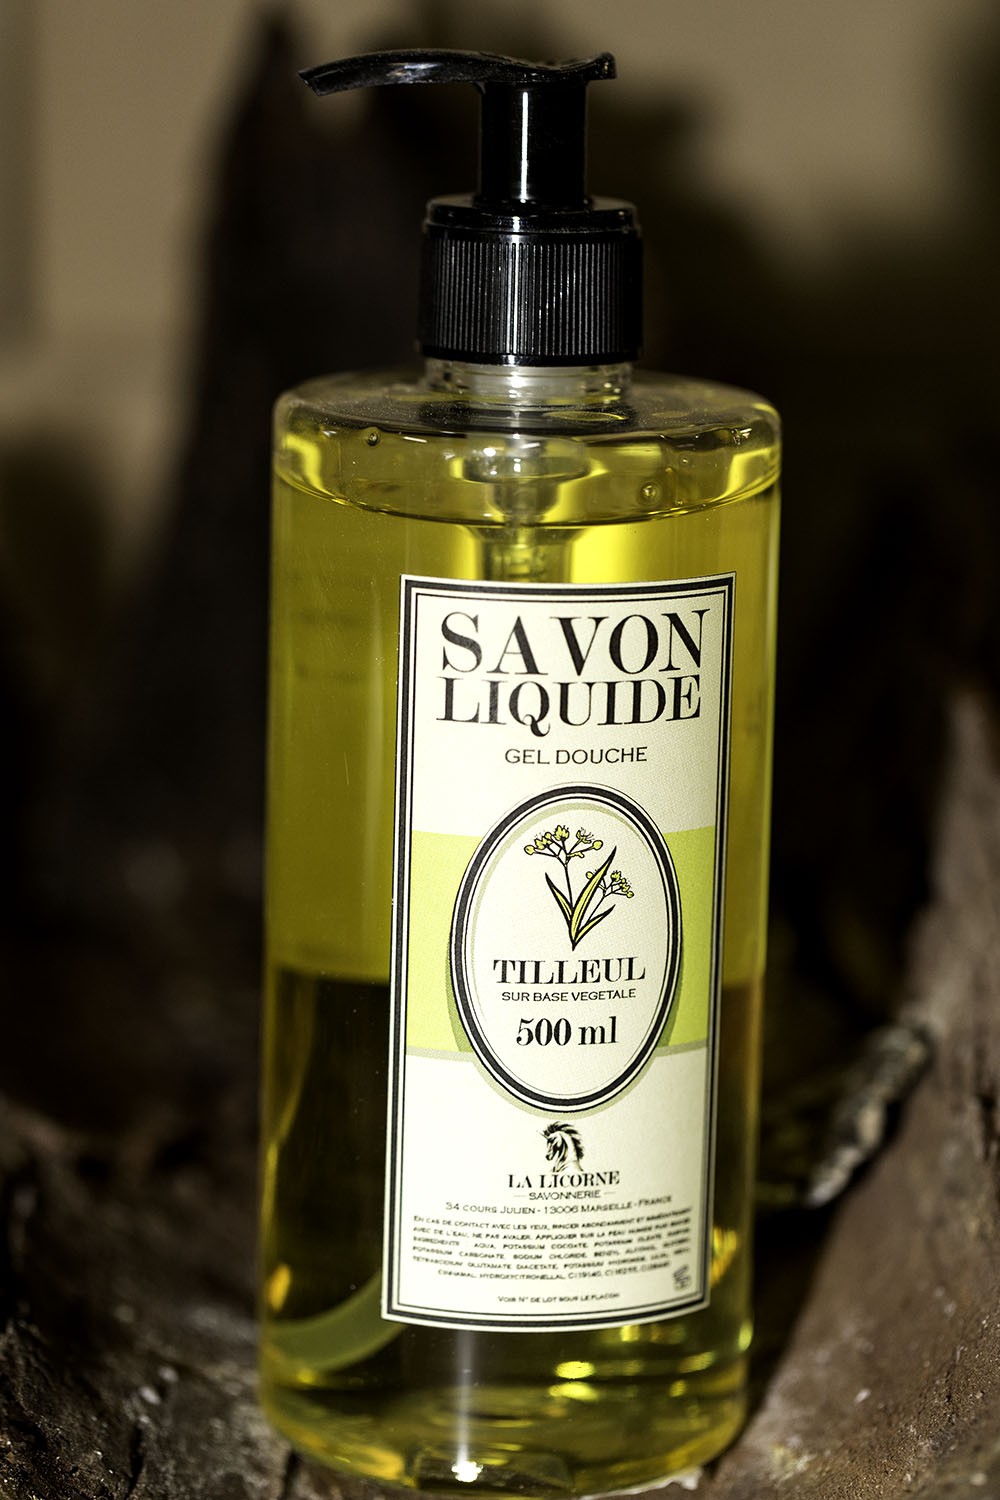 Liquid soap/shower gel - 500ml Tilleul